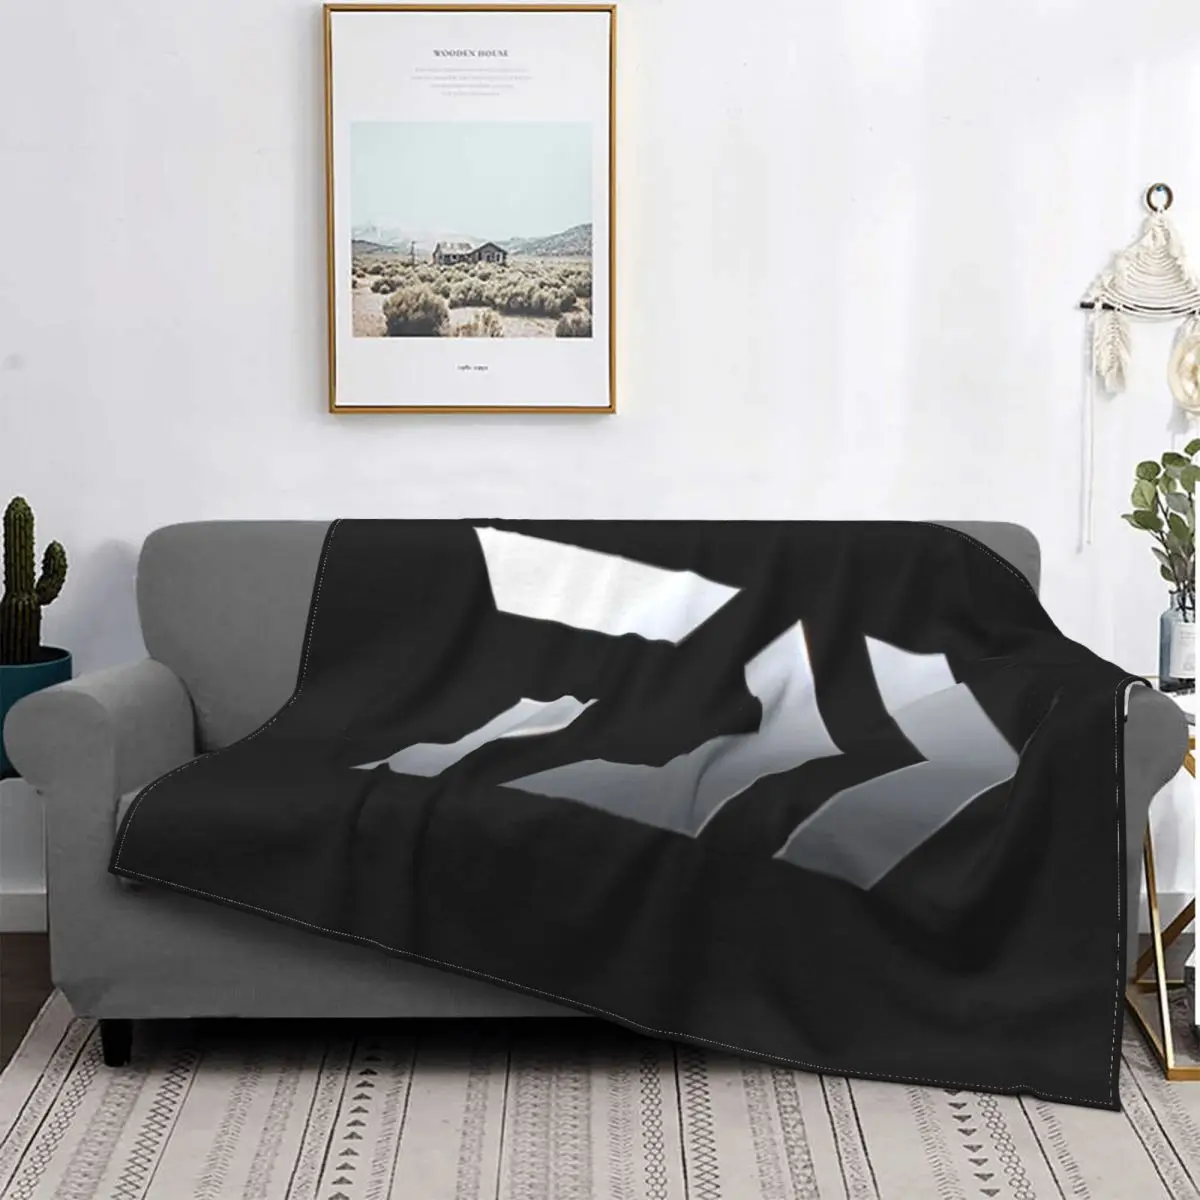 

Одеяло Daiwa Fishing 470, покрывало для кровати в клетку, покрывало для кровати в стиле аниме, плед для дивана, покрывало для пикника, покрывала для к...